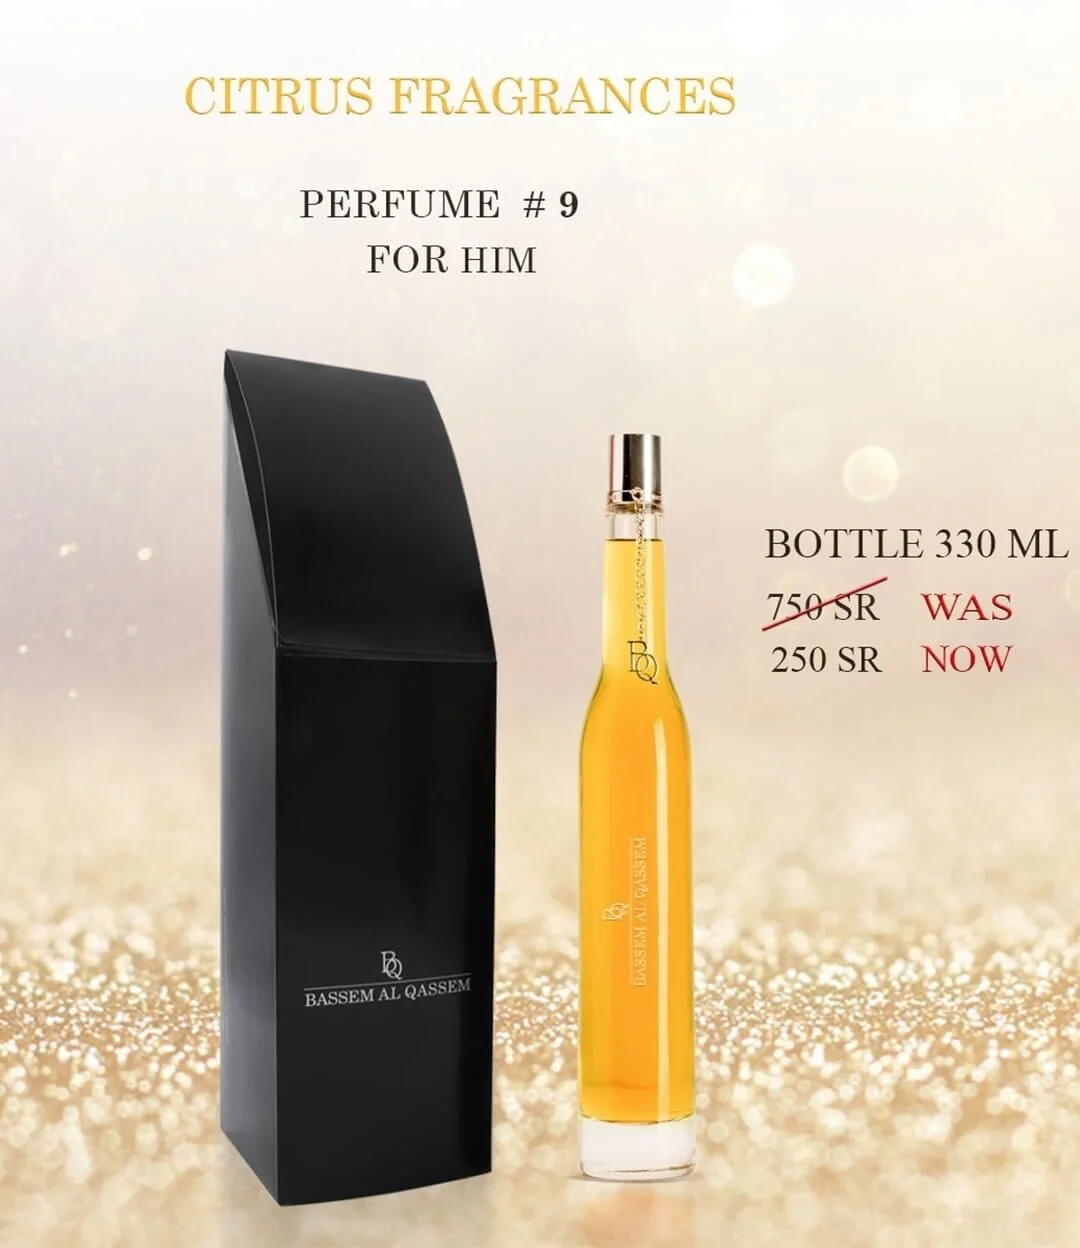 Perfume #9 Citrus Fragrance for Him by Bassem Al Qassem 